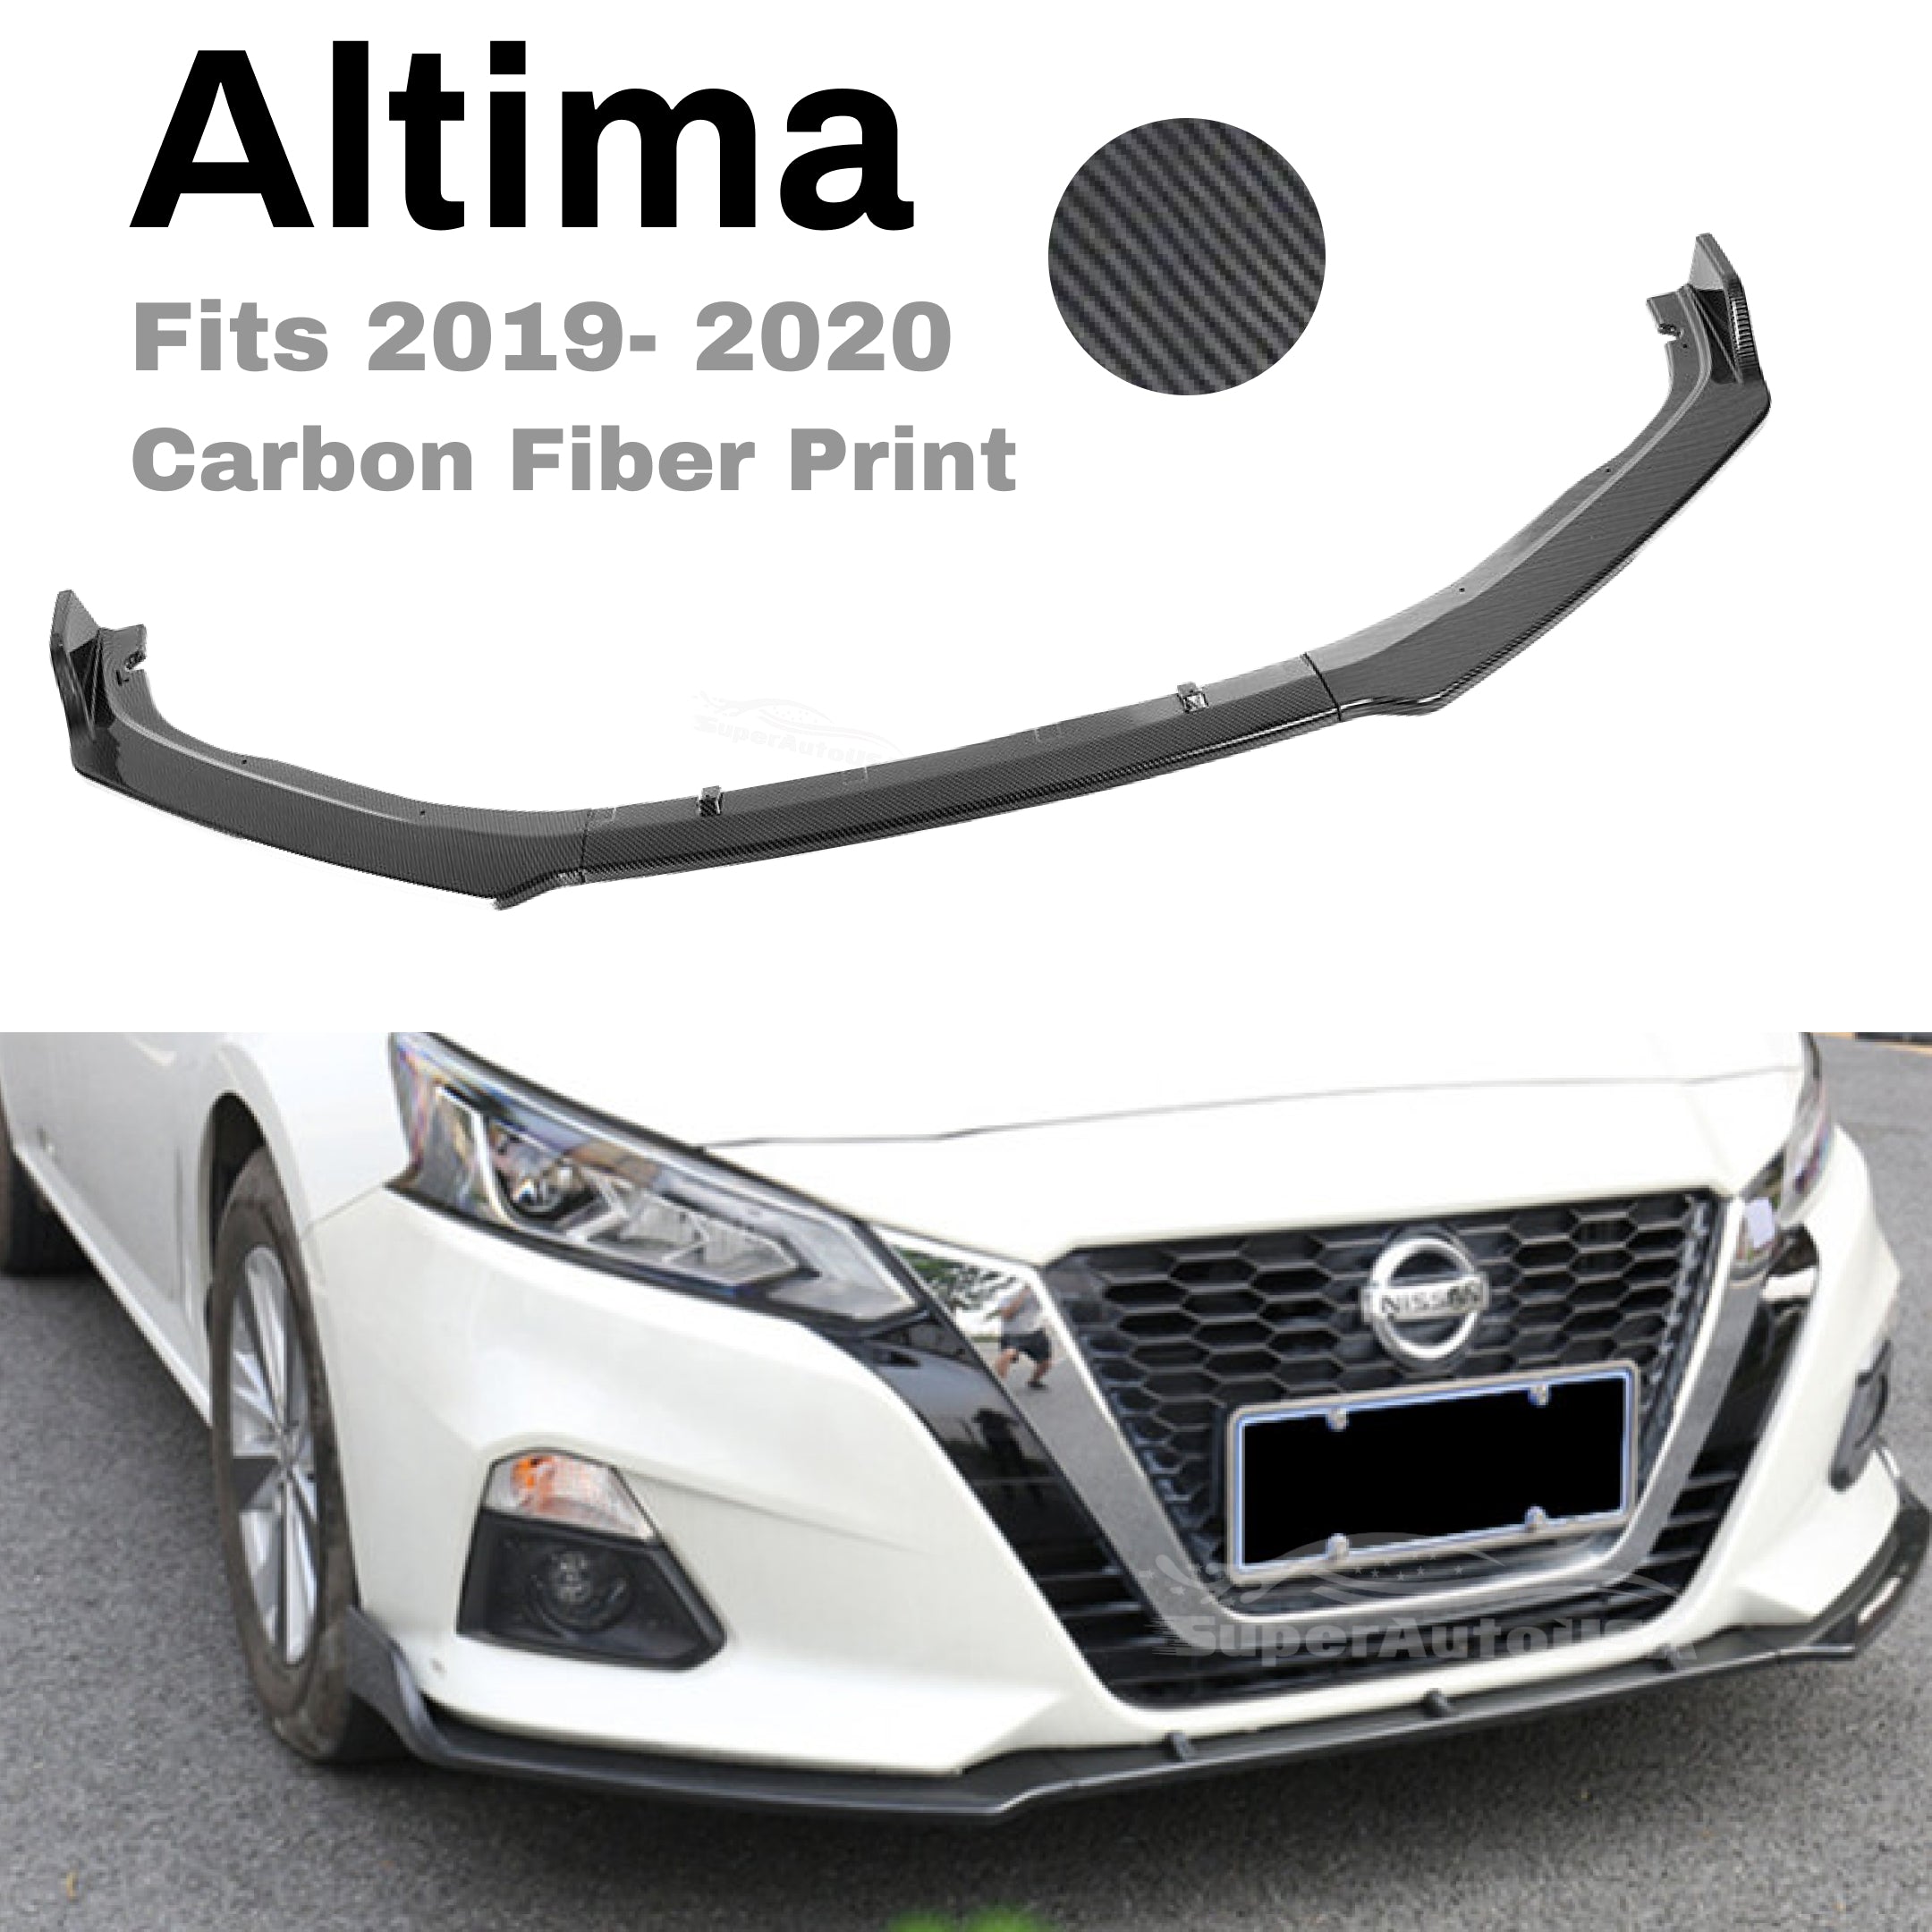 Fit 2019-2020 NISSAN ALTIMA FRONT BUMPER LIP SPOILER (Carbon Fiber Print) - 0